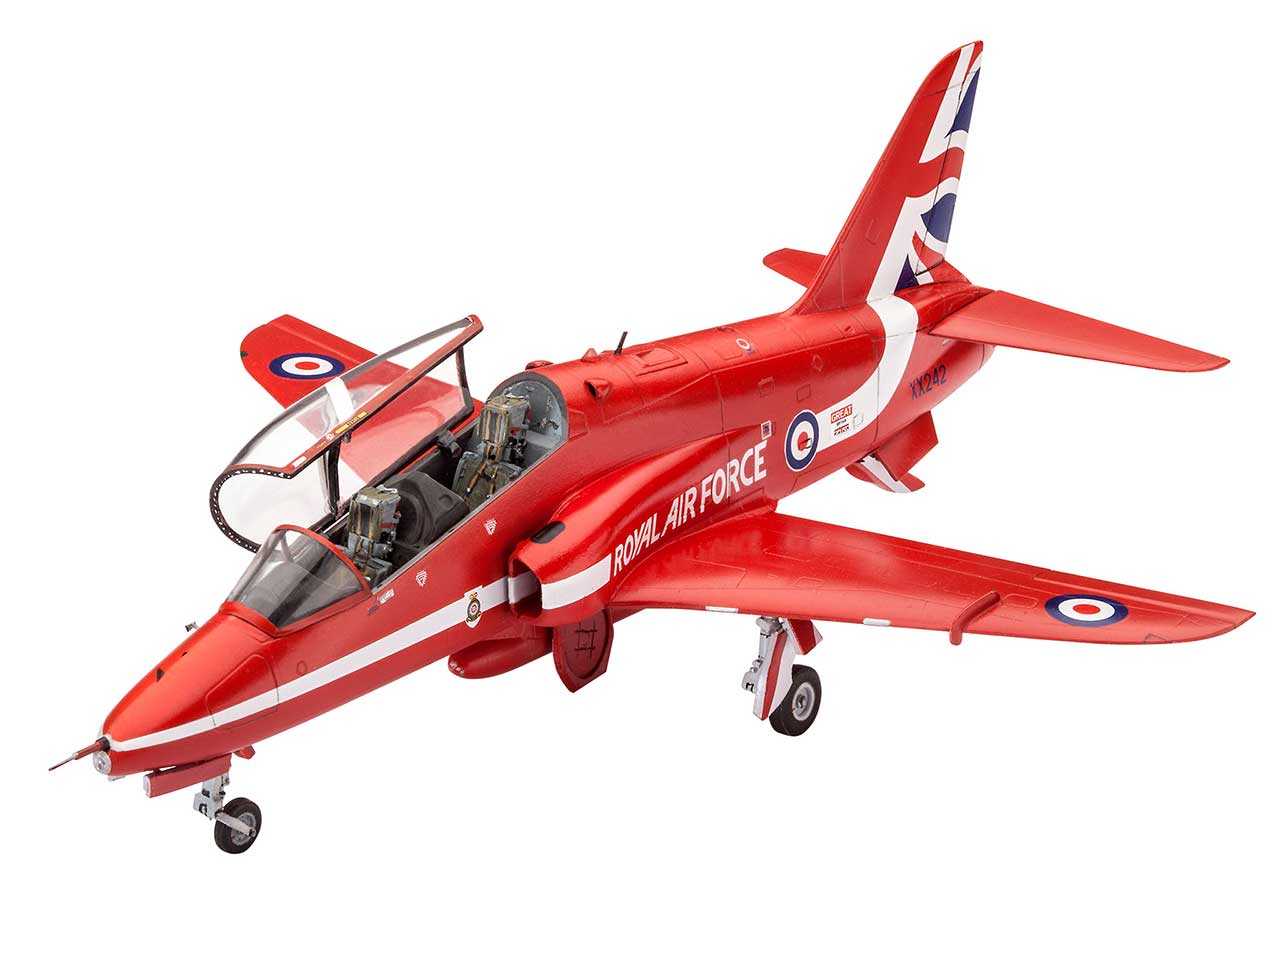 Revell ModelSet letadlo 64921 - Bae Hawk T.1 Red Arrows (1:72)